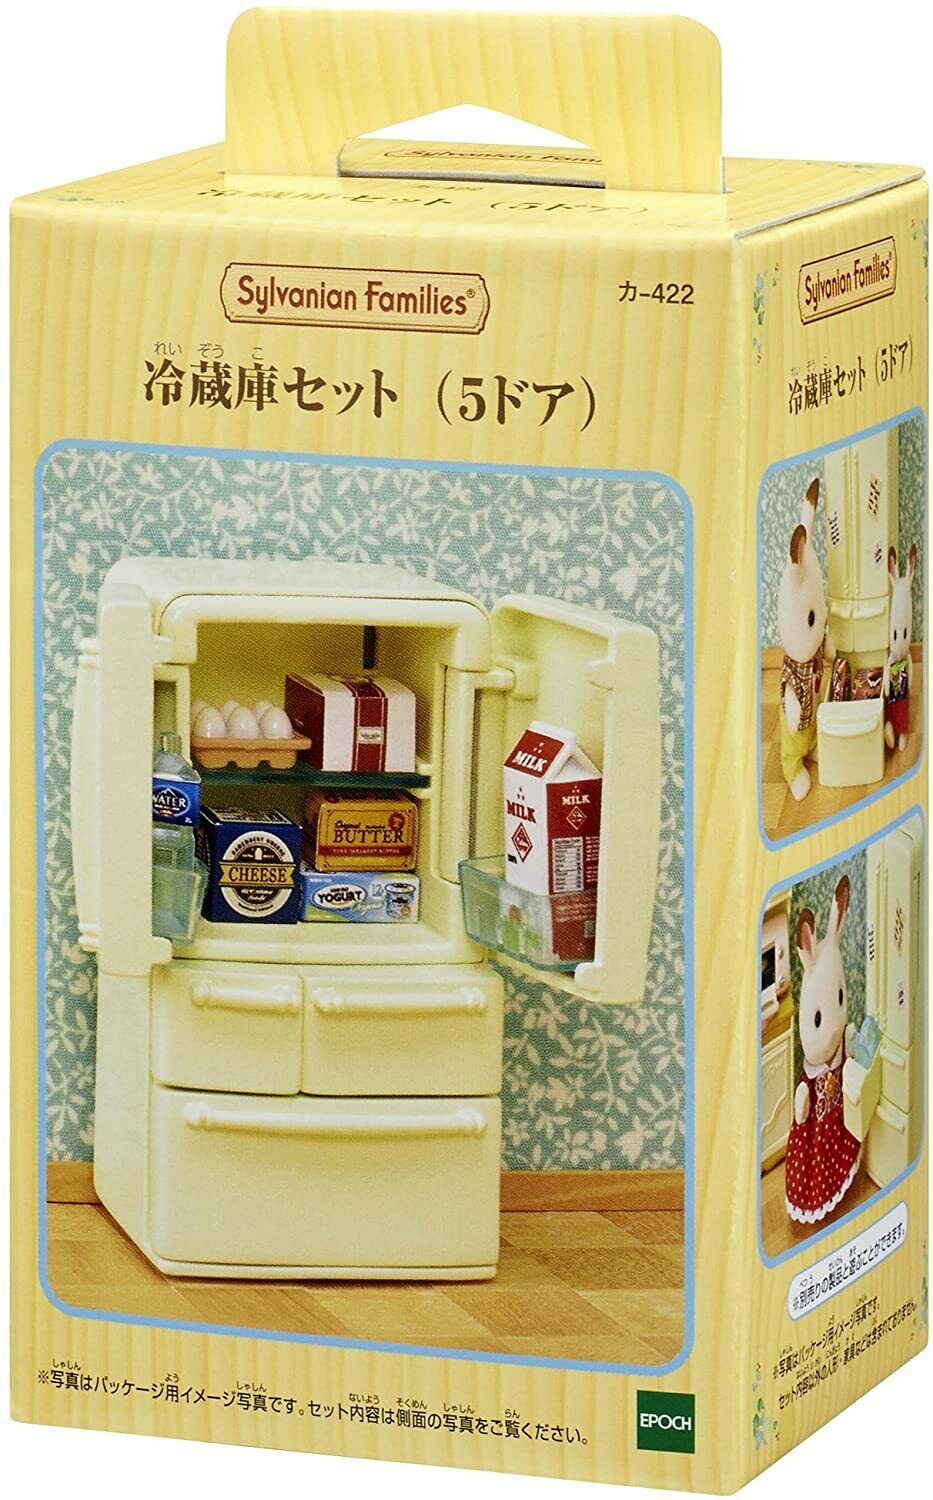 EPOCH Sylvanian Families Refrigerator Set (5 doors) JAPAN import